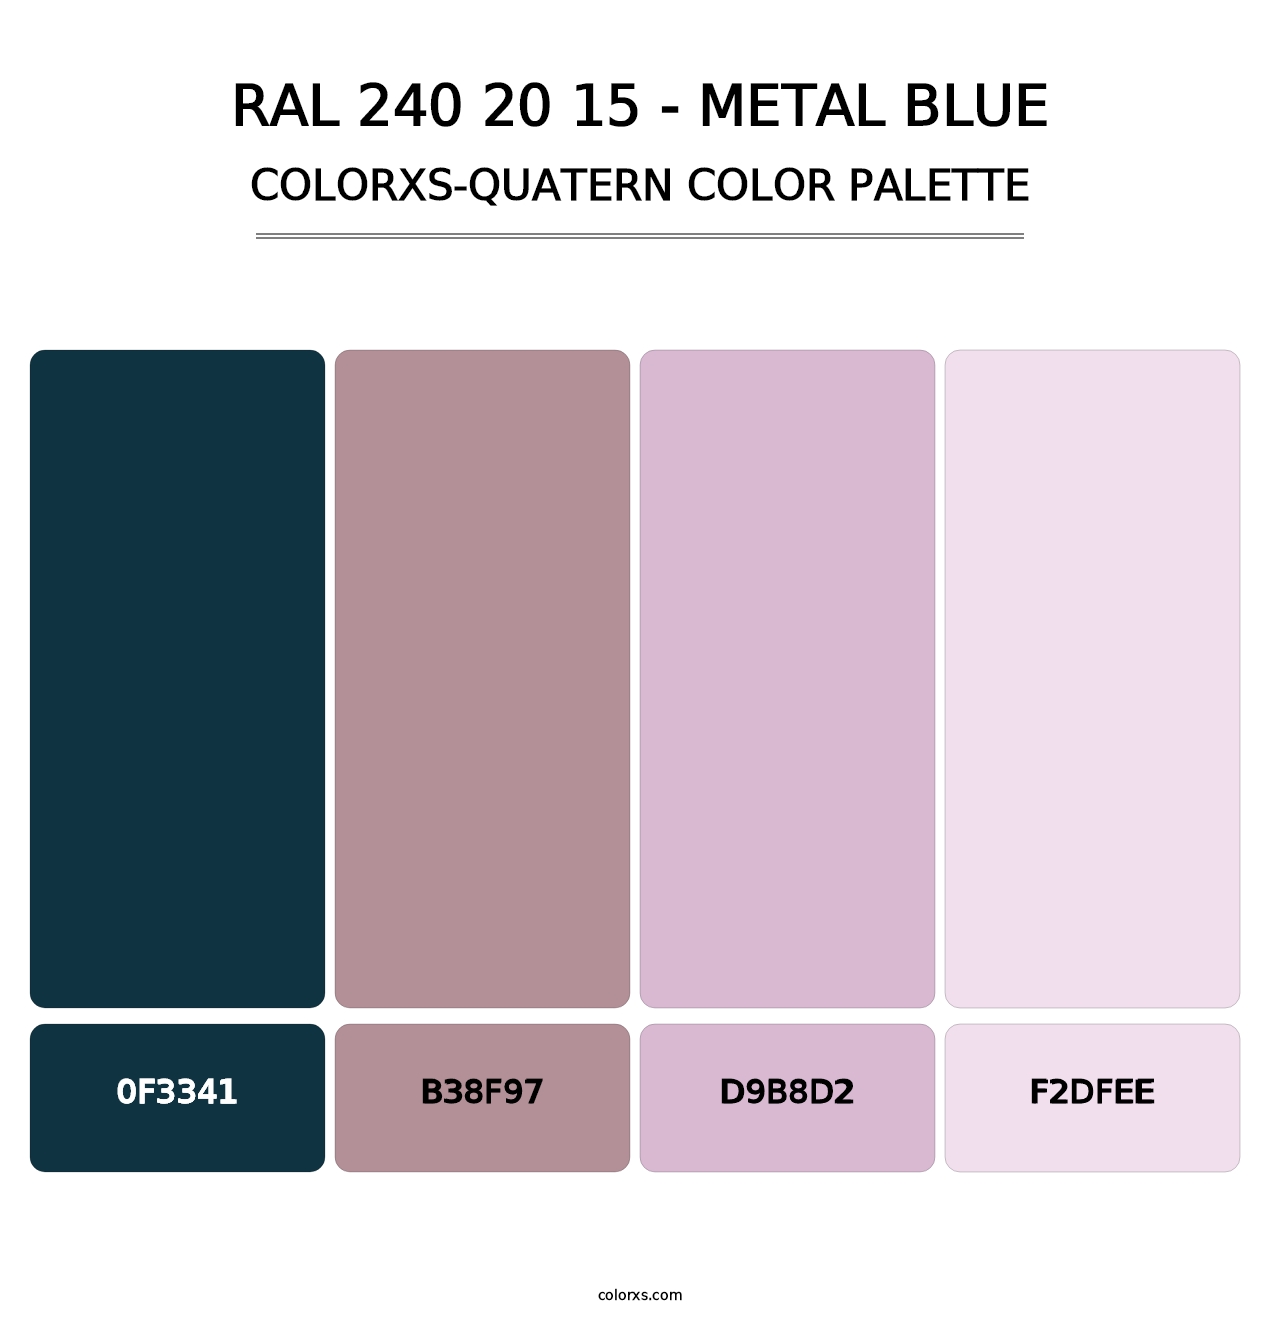 RAL 240 20 15 - Metal Blue - Colorxs Quatern Palette